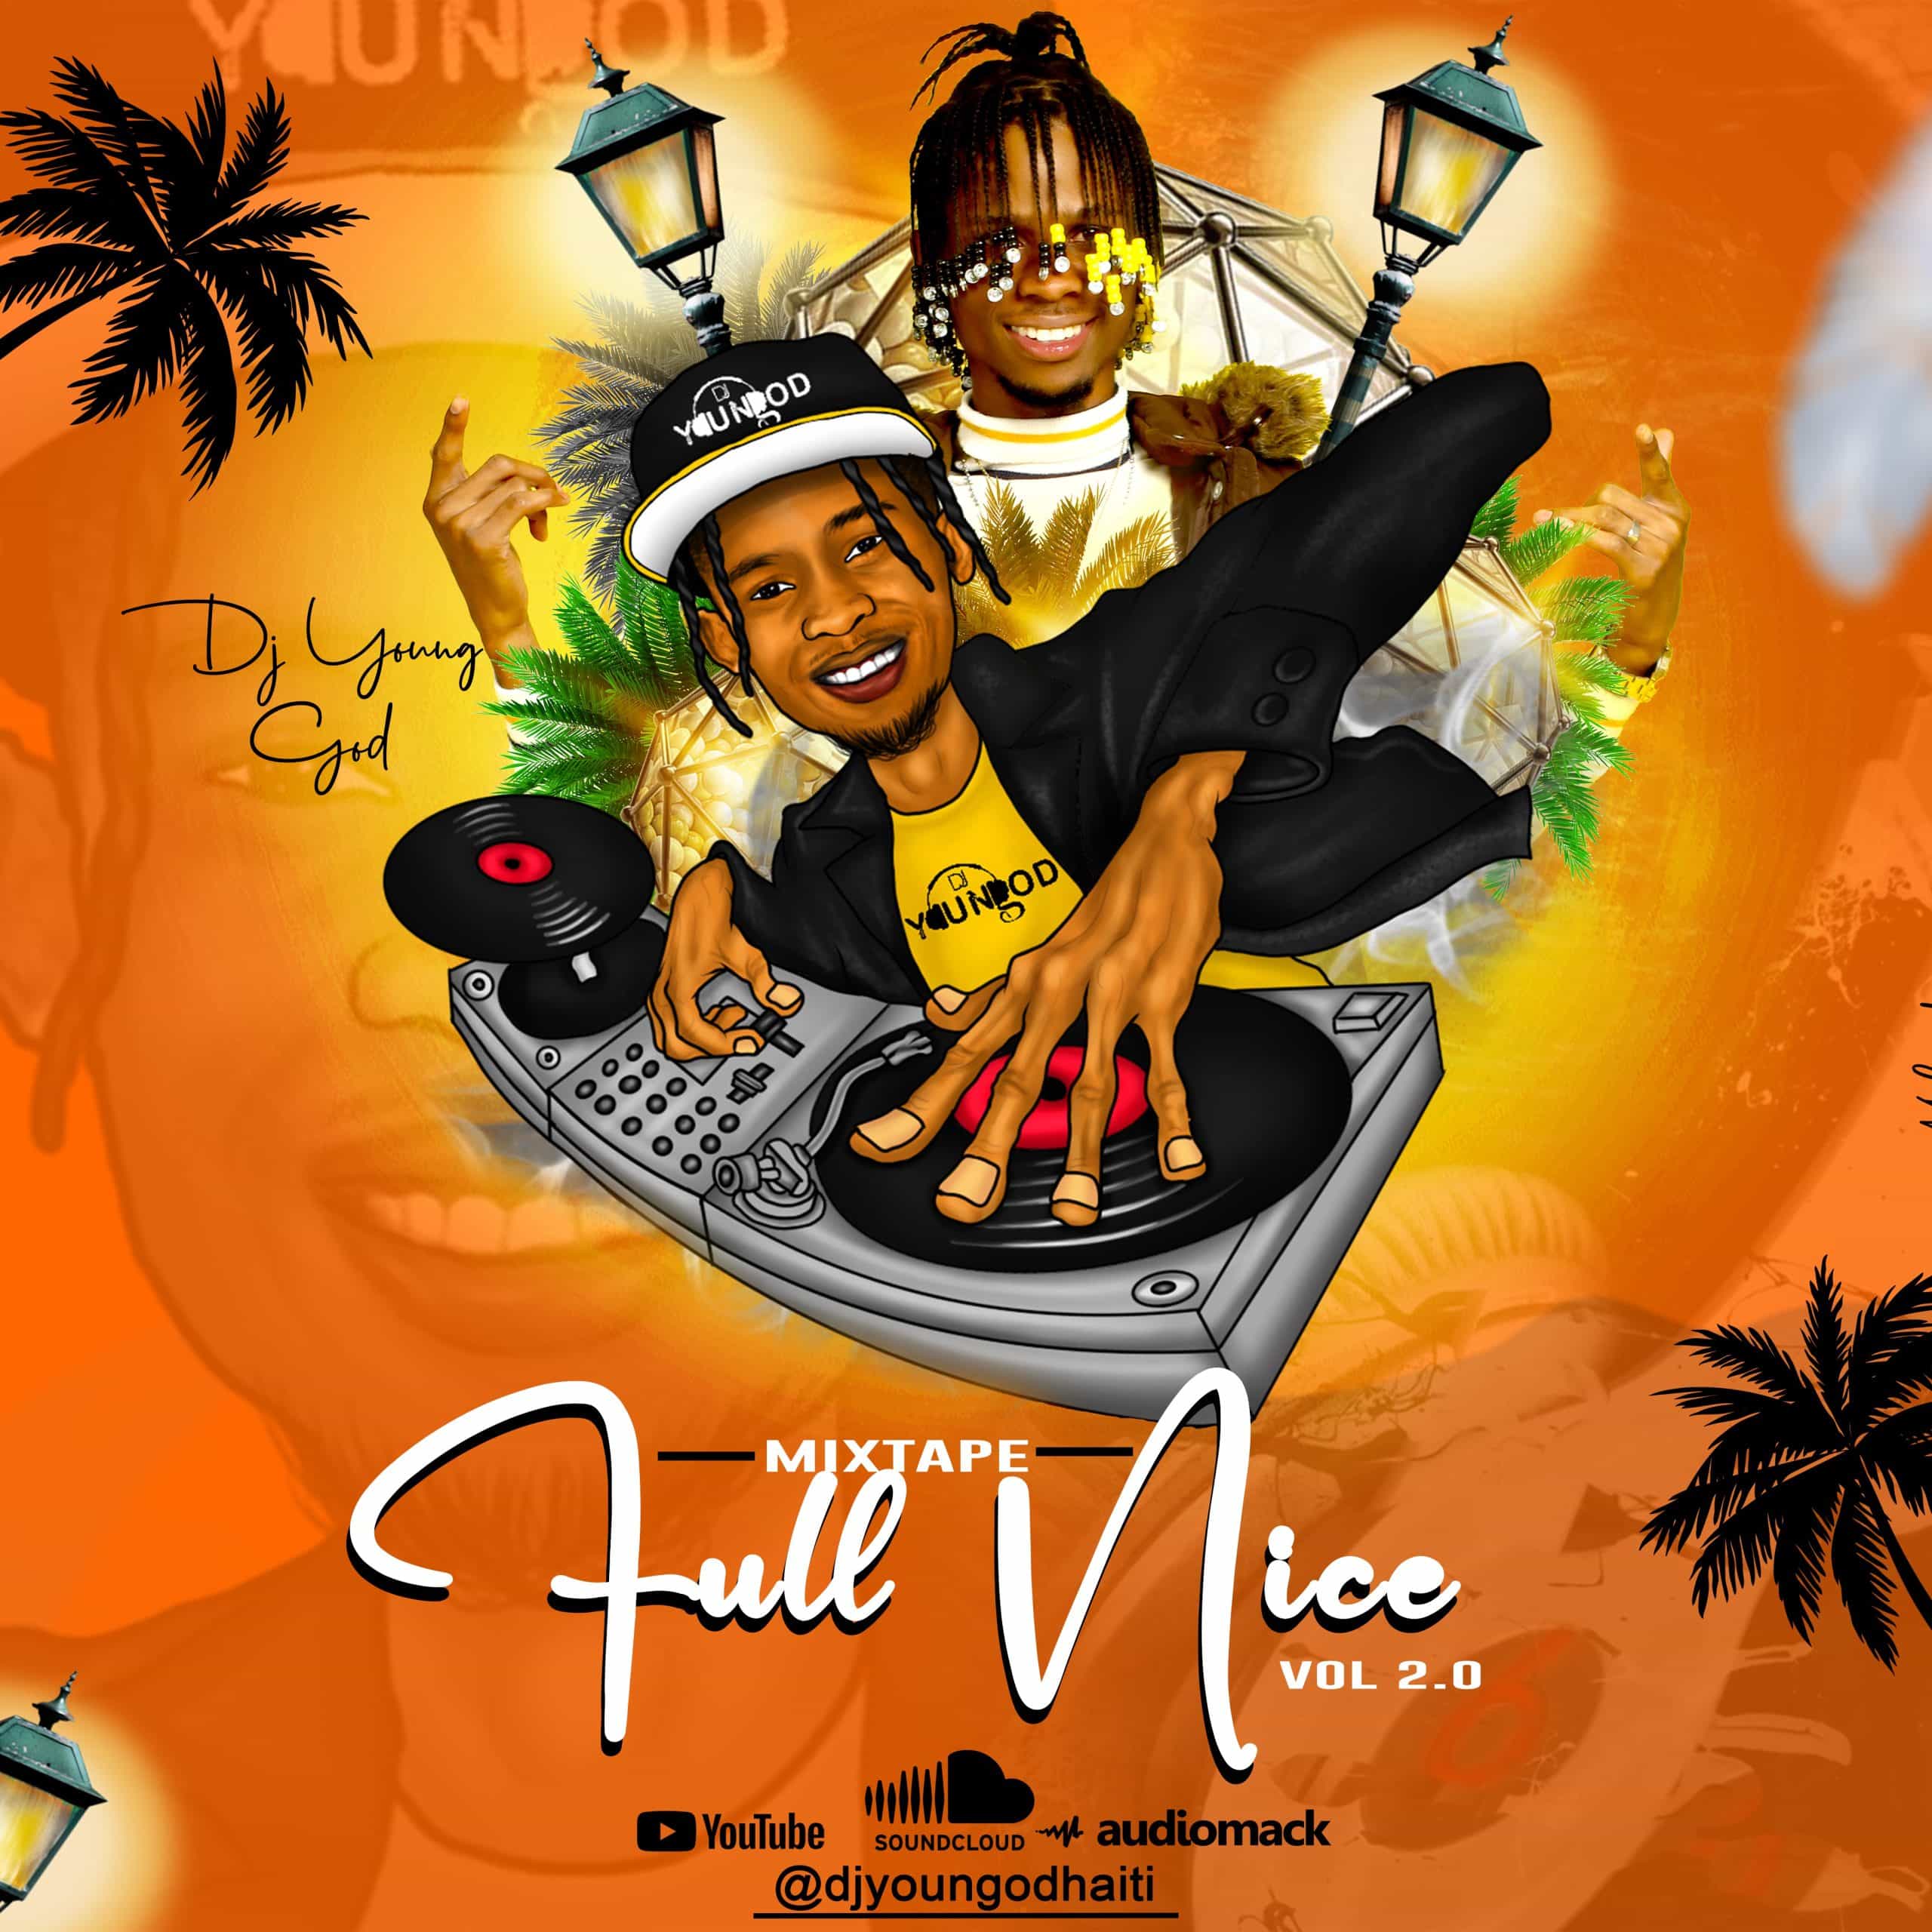 Mixtape full nice20 by DJ Young God